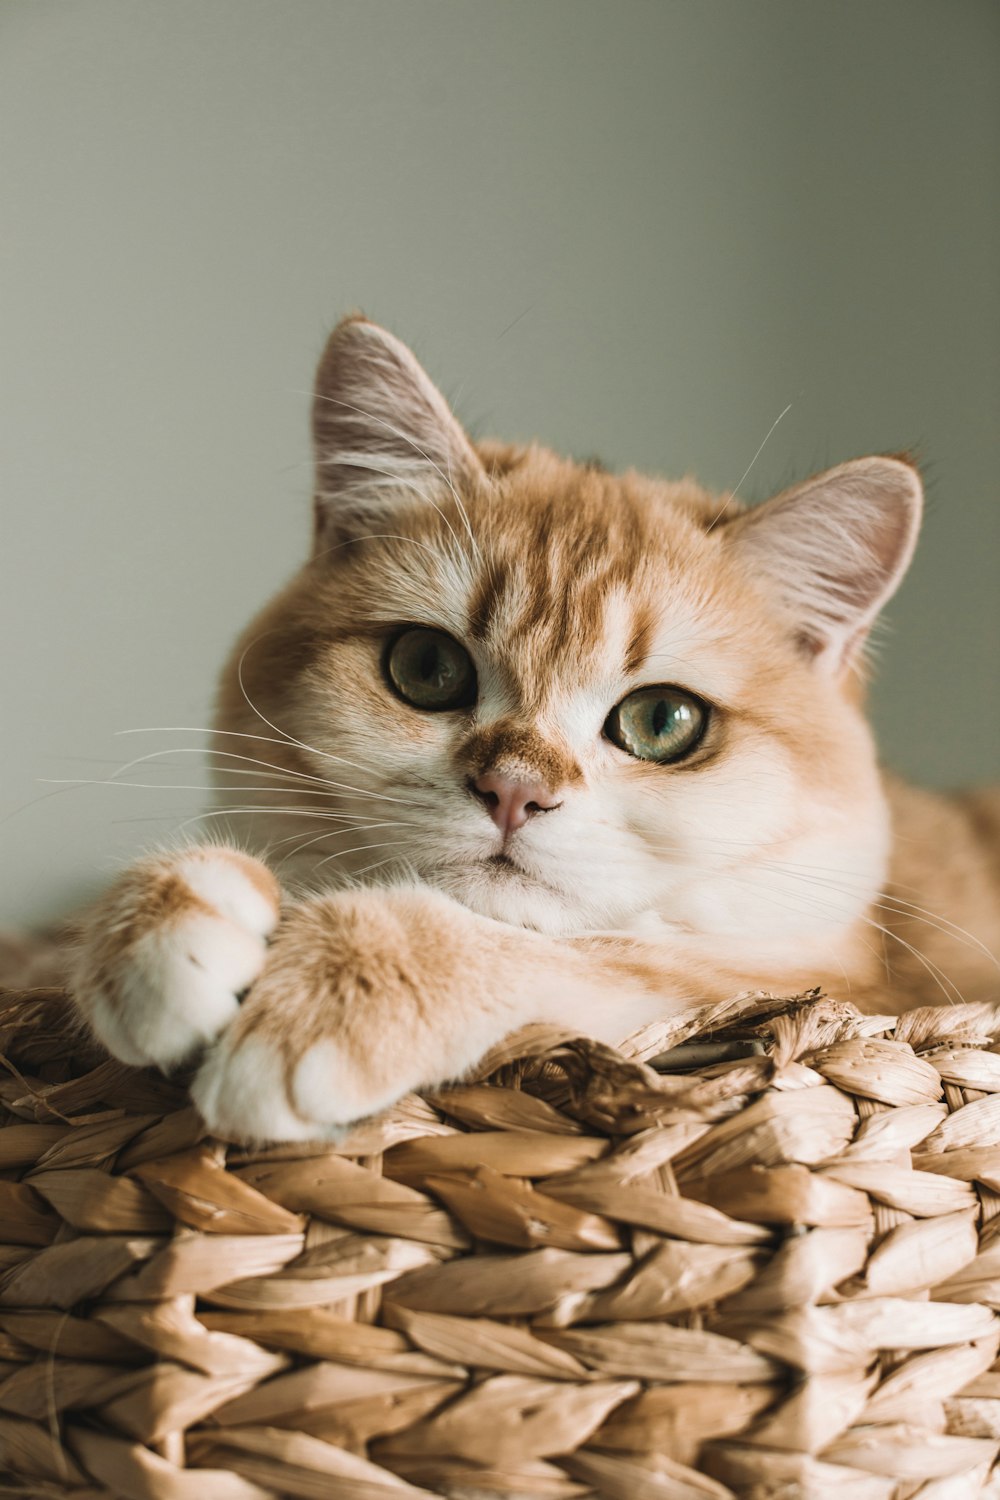 orangefarbene Tabby-Katze auf braun geflochtenem Korb